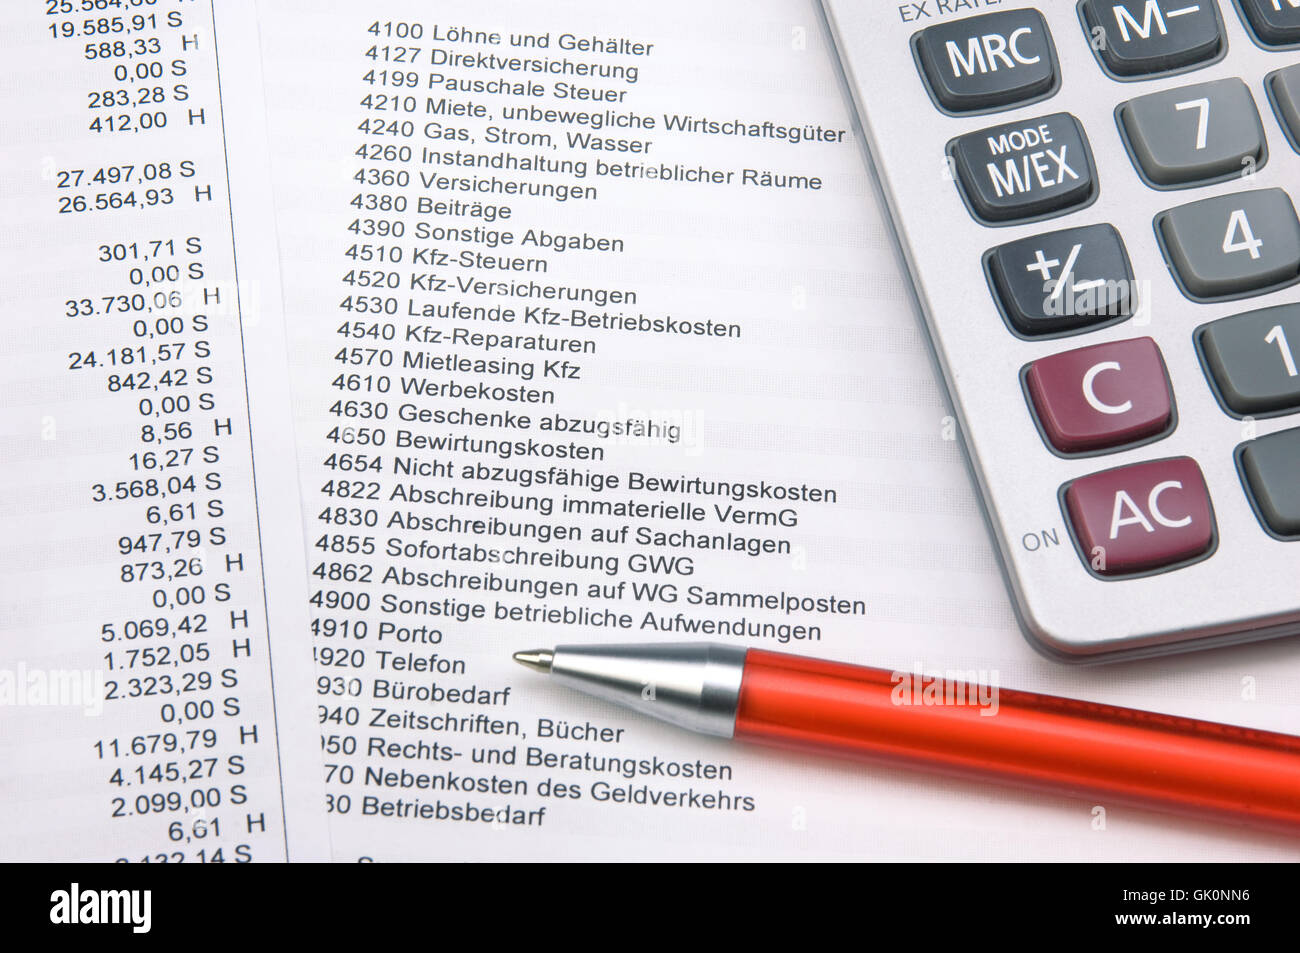 evaluation accounting managerial-economics Stock Photo